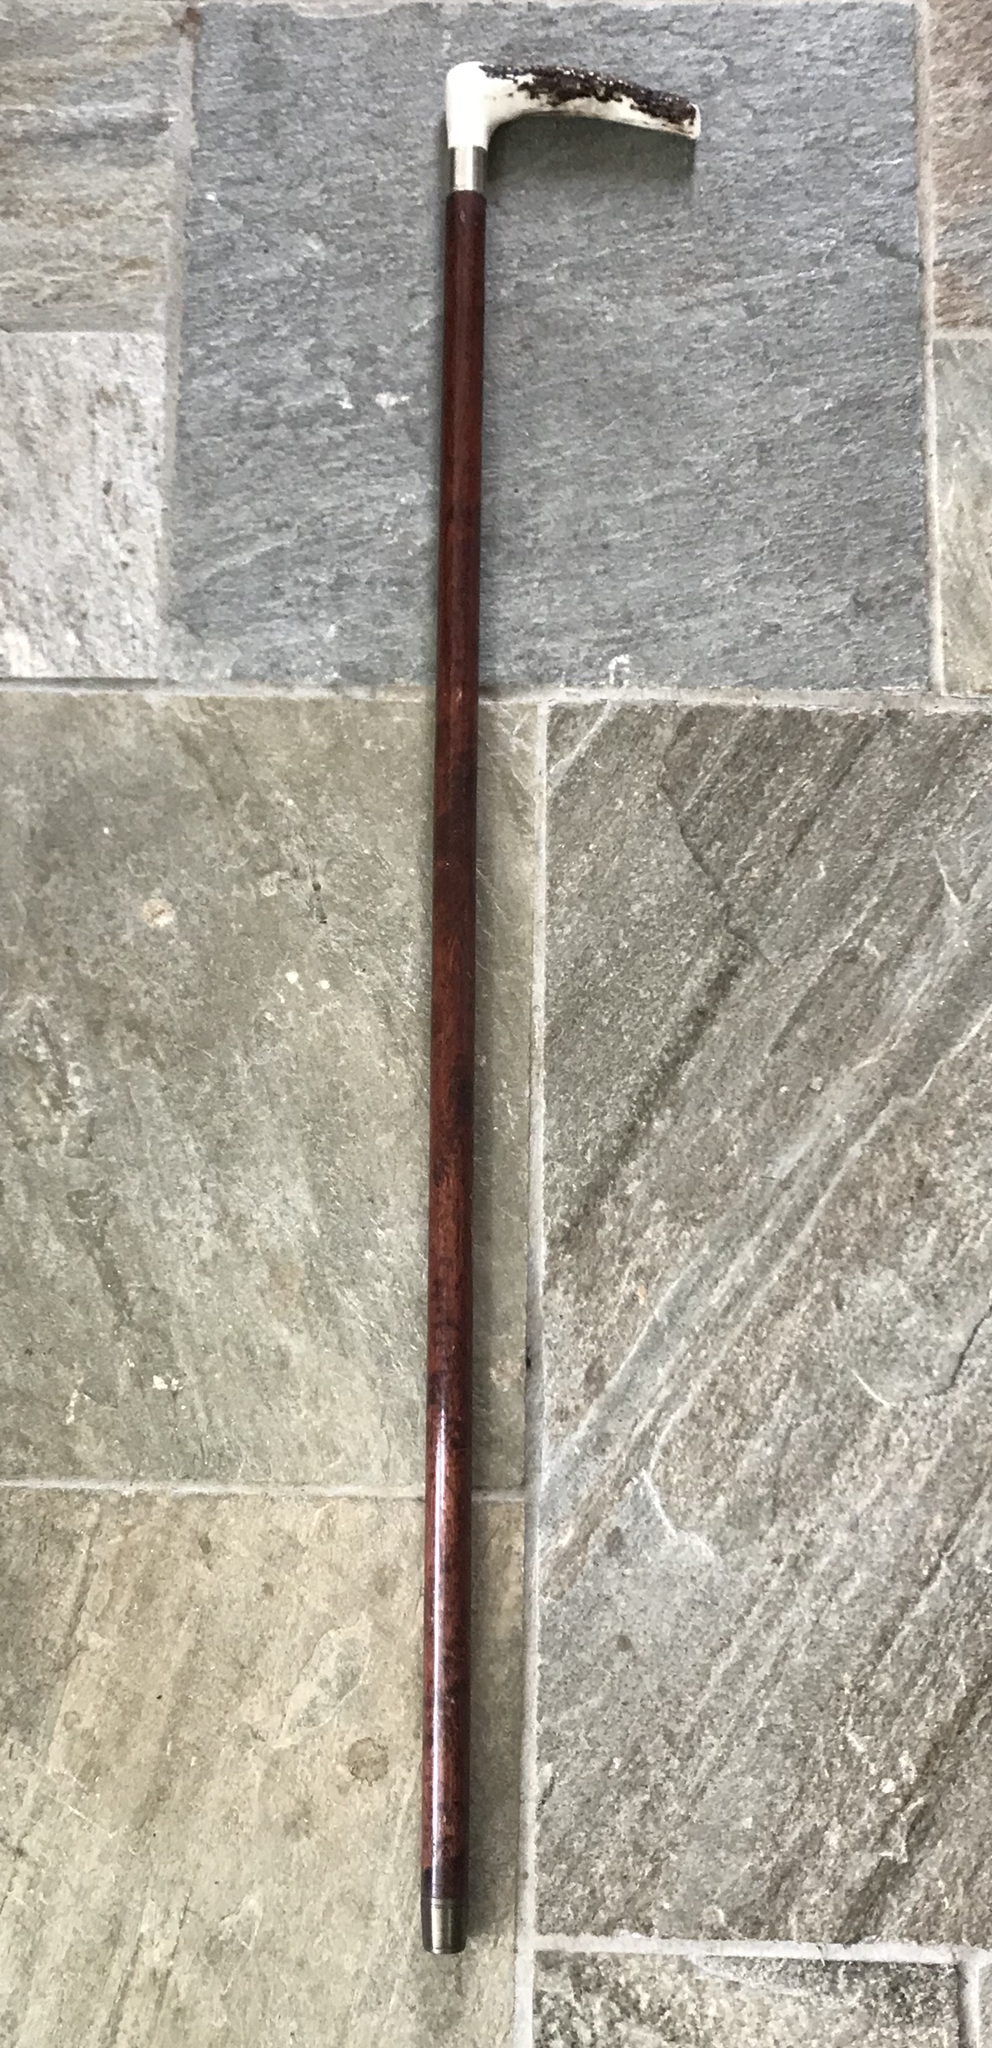 Sold at Auction: Vintage Horse Measuring Stick